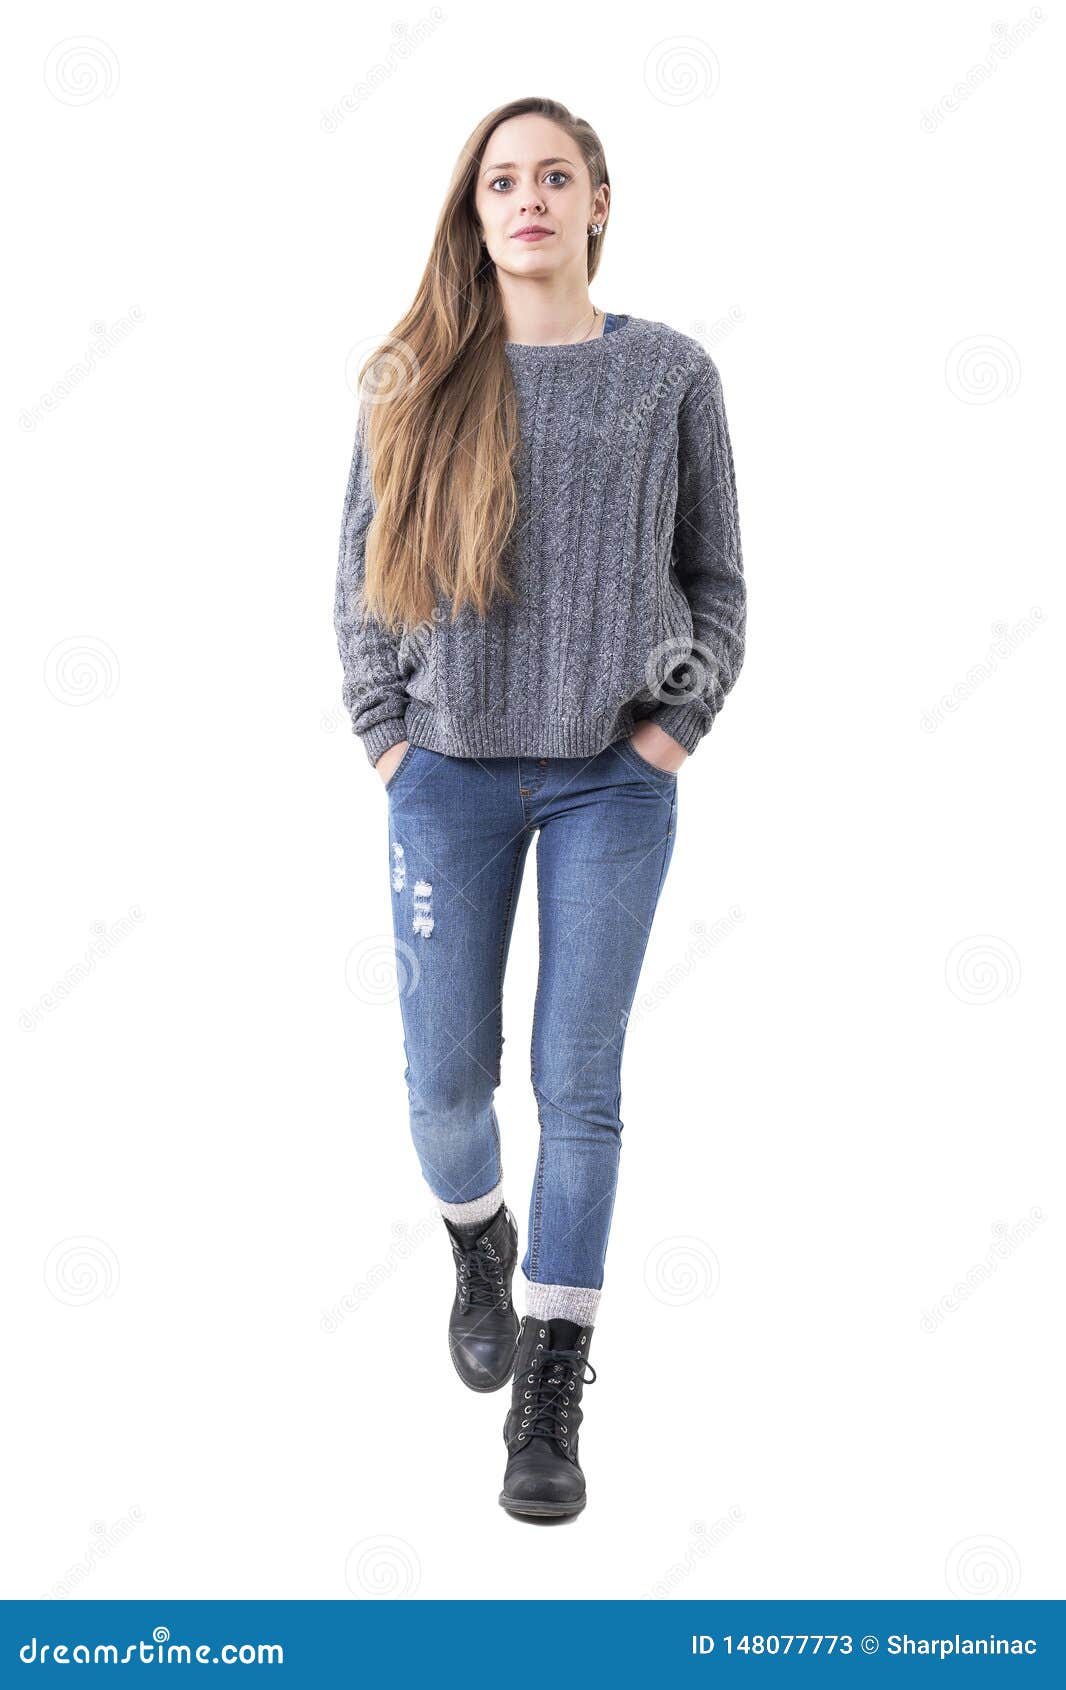 walking sweater